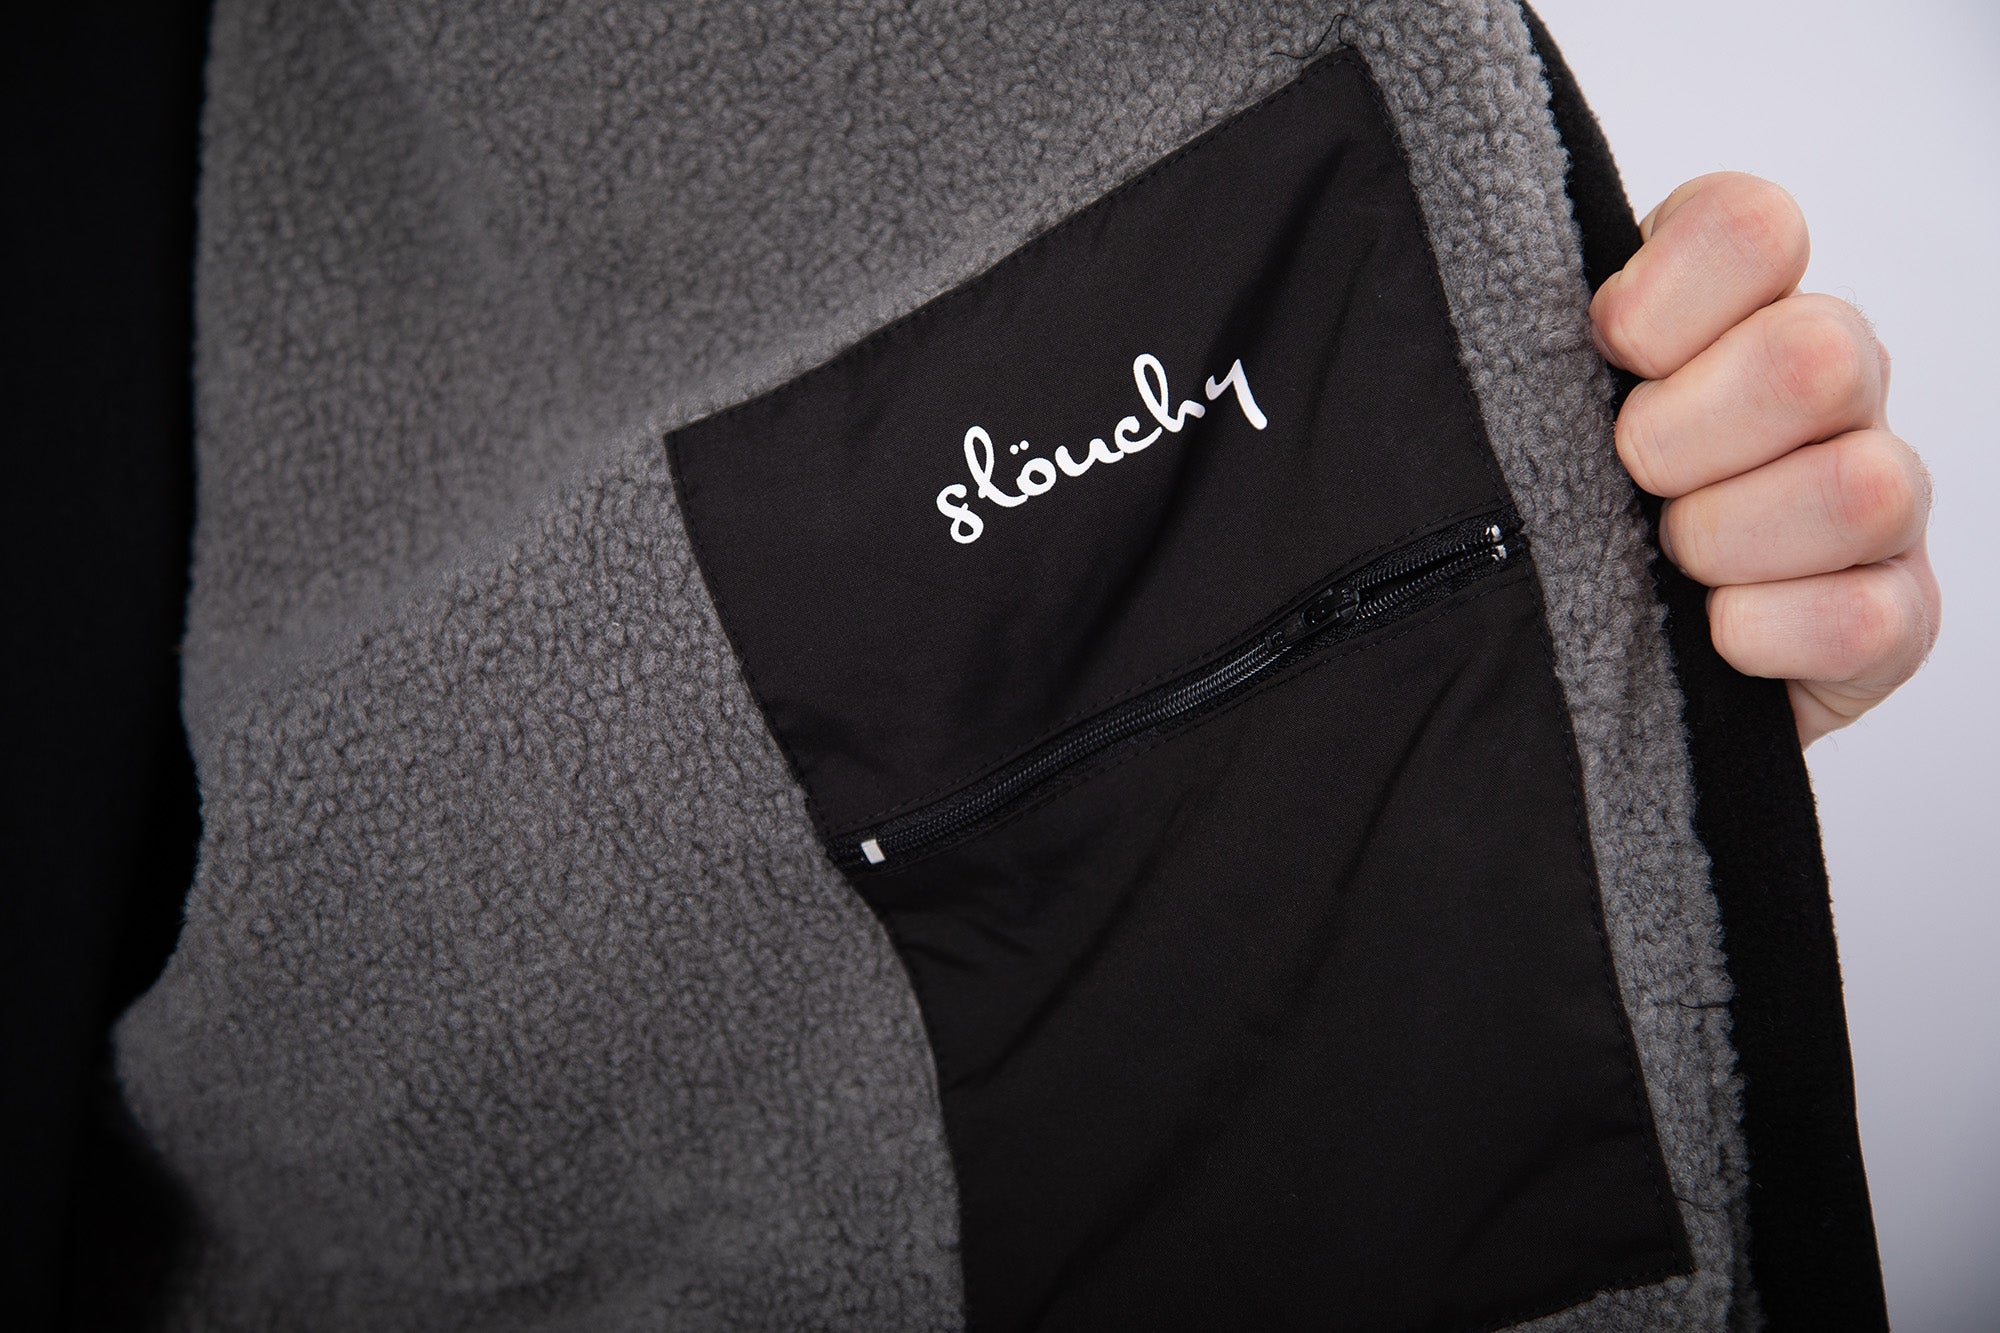 Long Sleeve Change Robe - Black/Grey - Slouchy